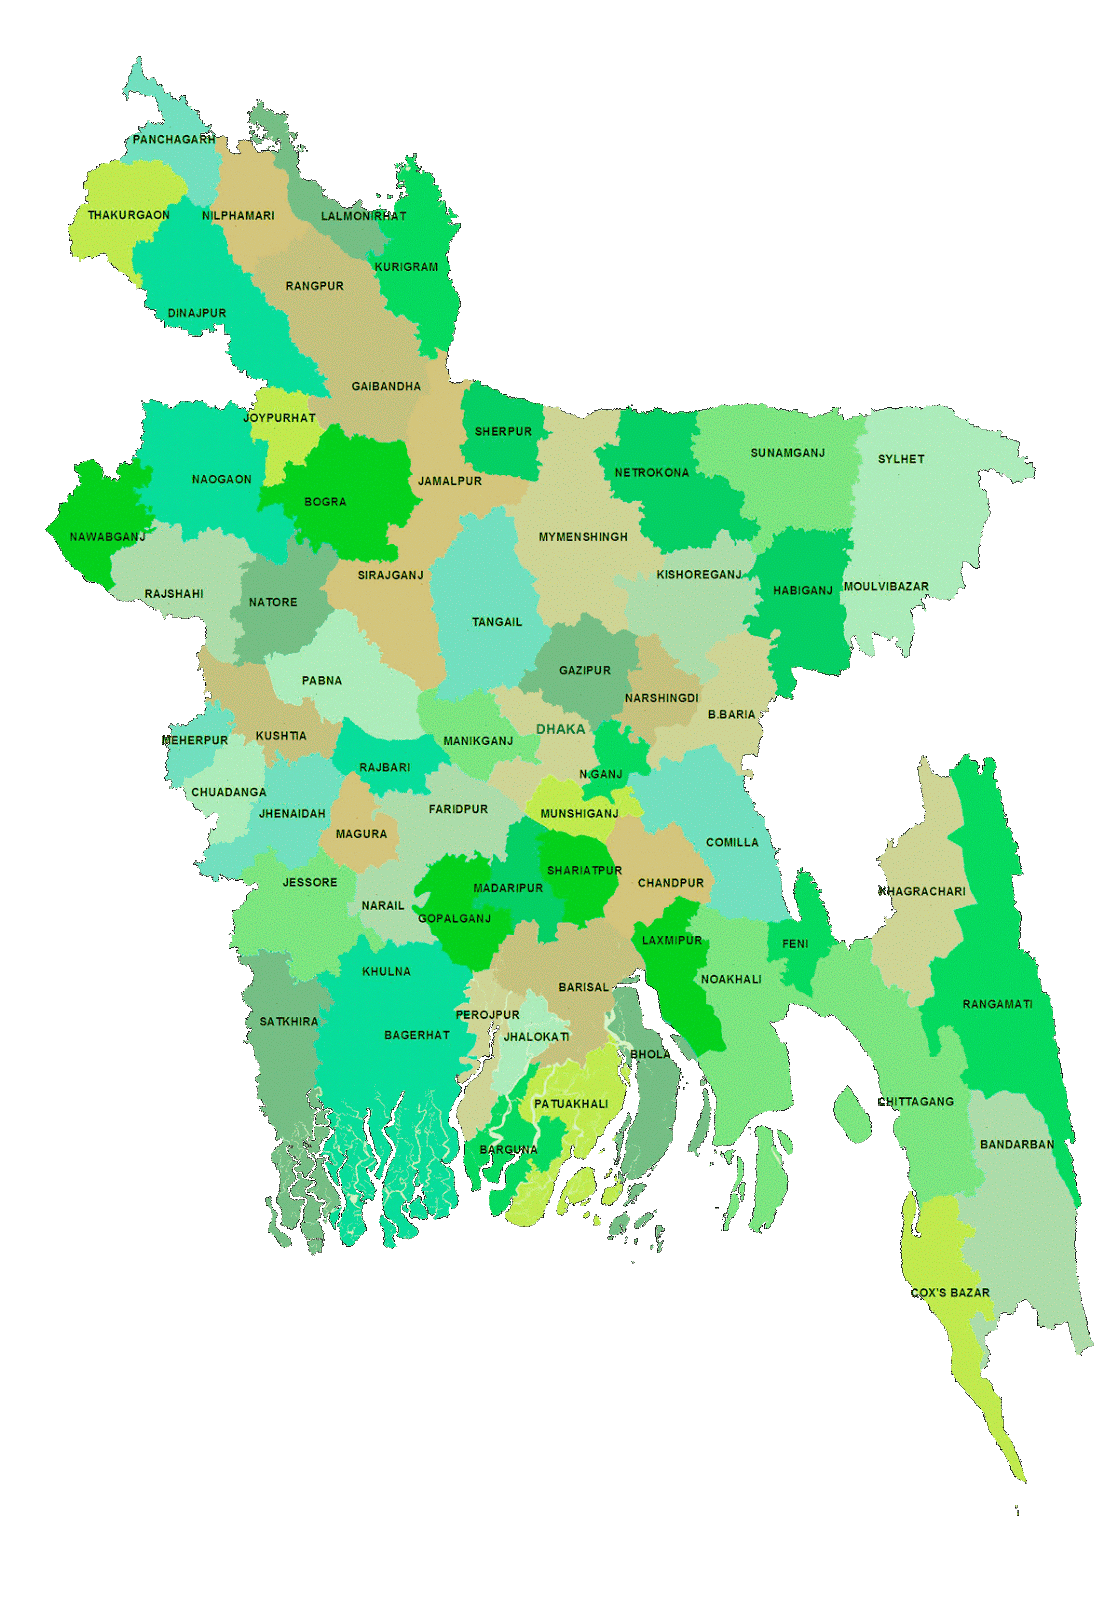 Bangladesh2 